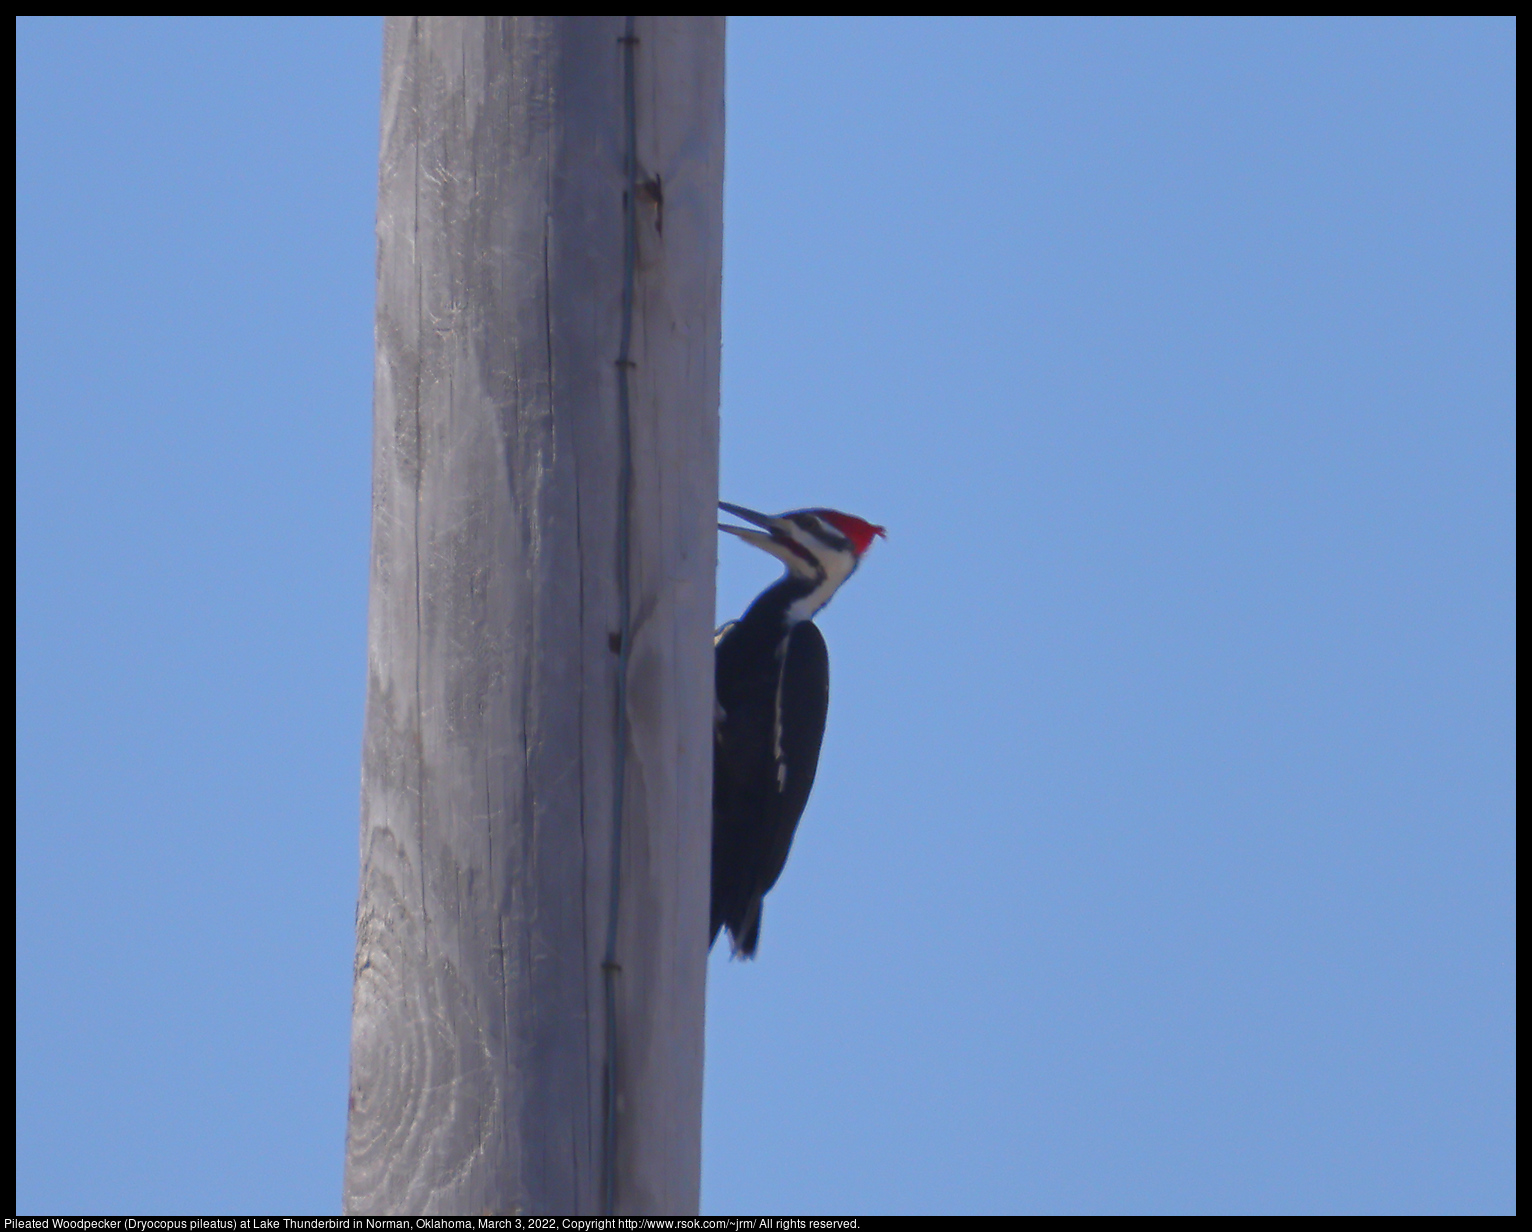 Pileated Woodpecker (Dryocopus pileatus) at Lake Thunderbird in Norman, Oklahoma, March 3, 2022